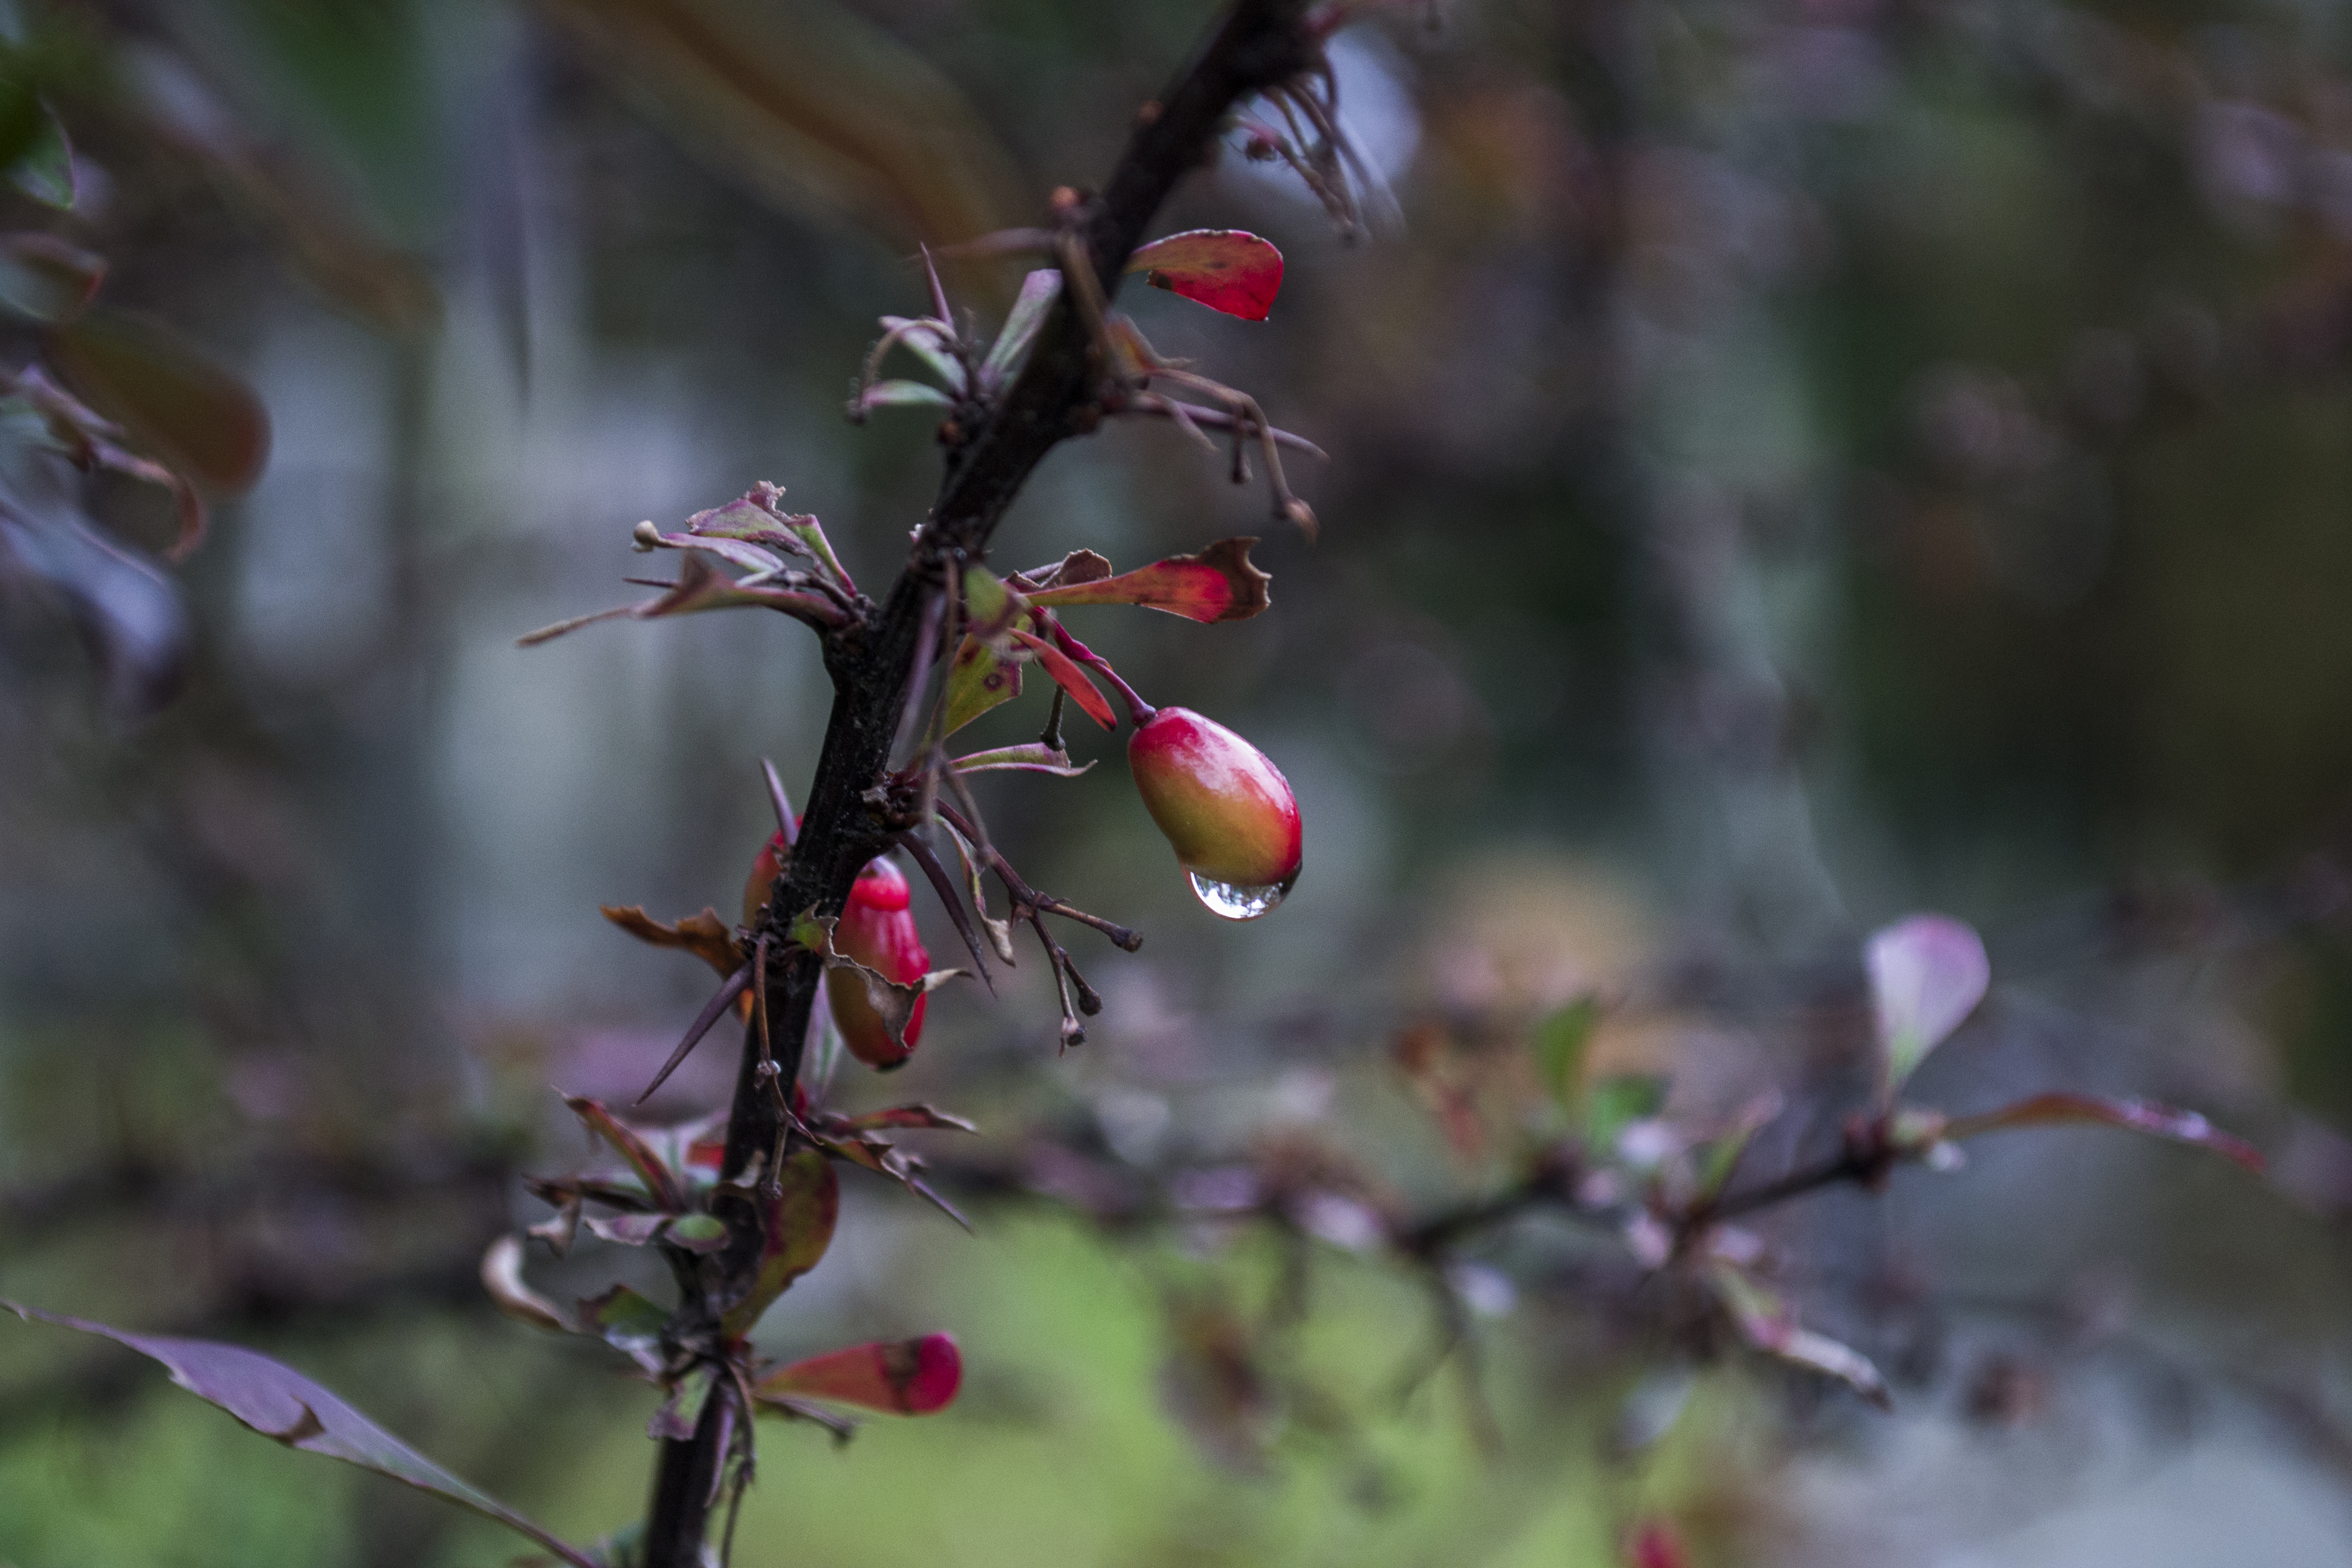 General 4608x3072 plants berries outdoors water drops closeup macro